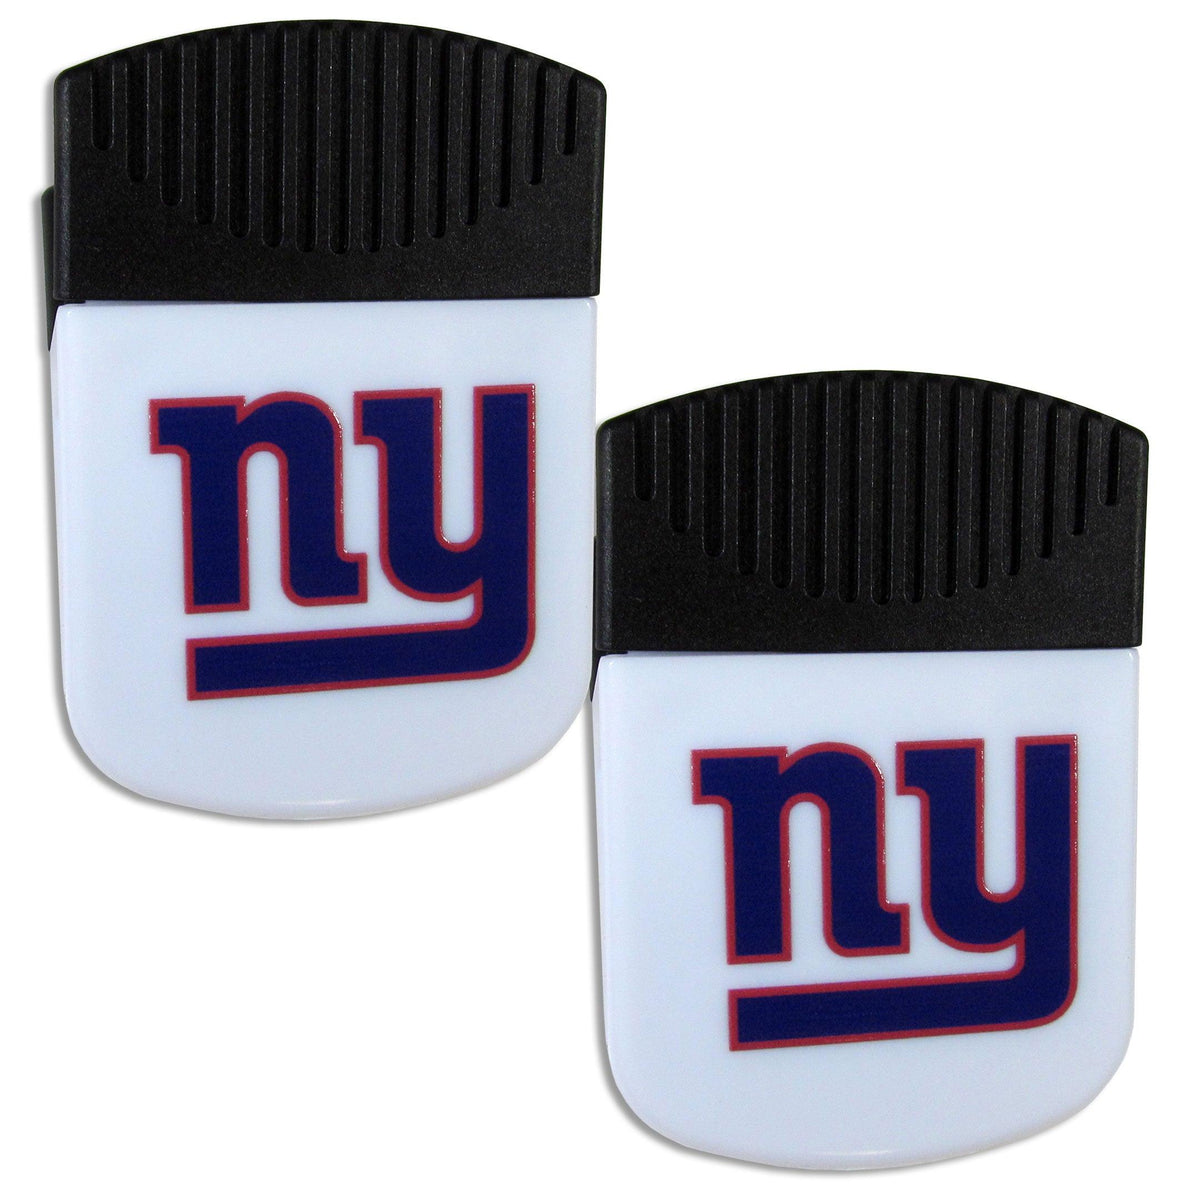 New York Giants Chip Clip Magnet with Bottle Opener, 2 pack - Flyclothing LLC